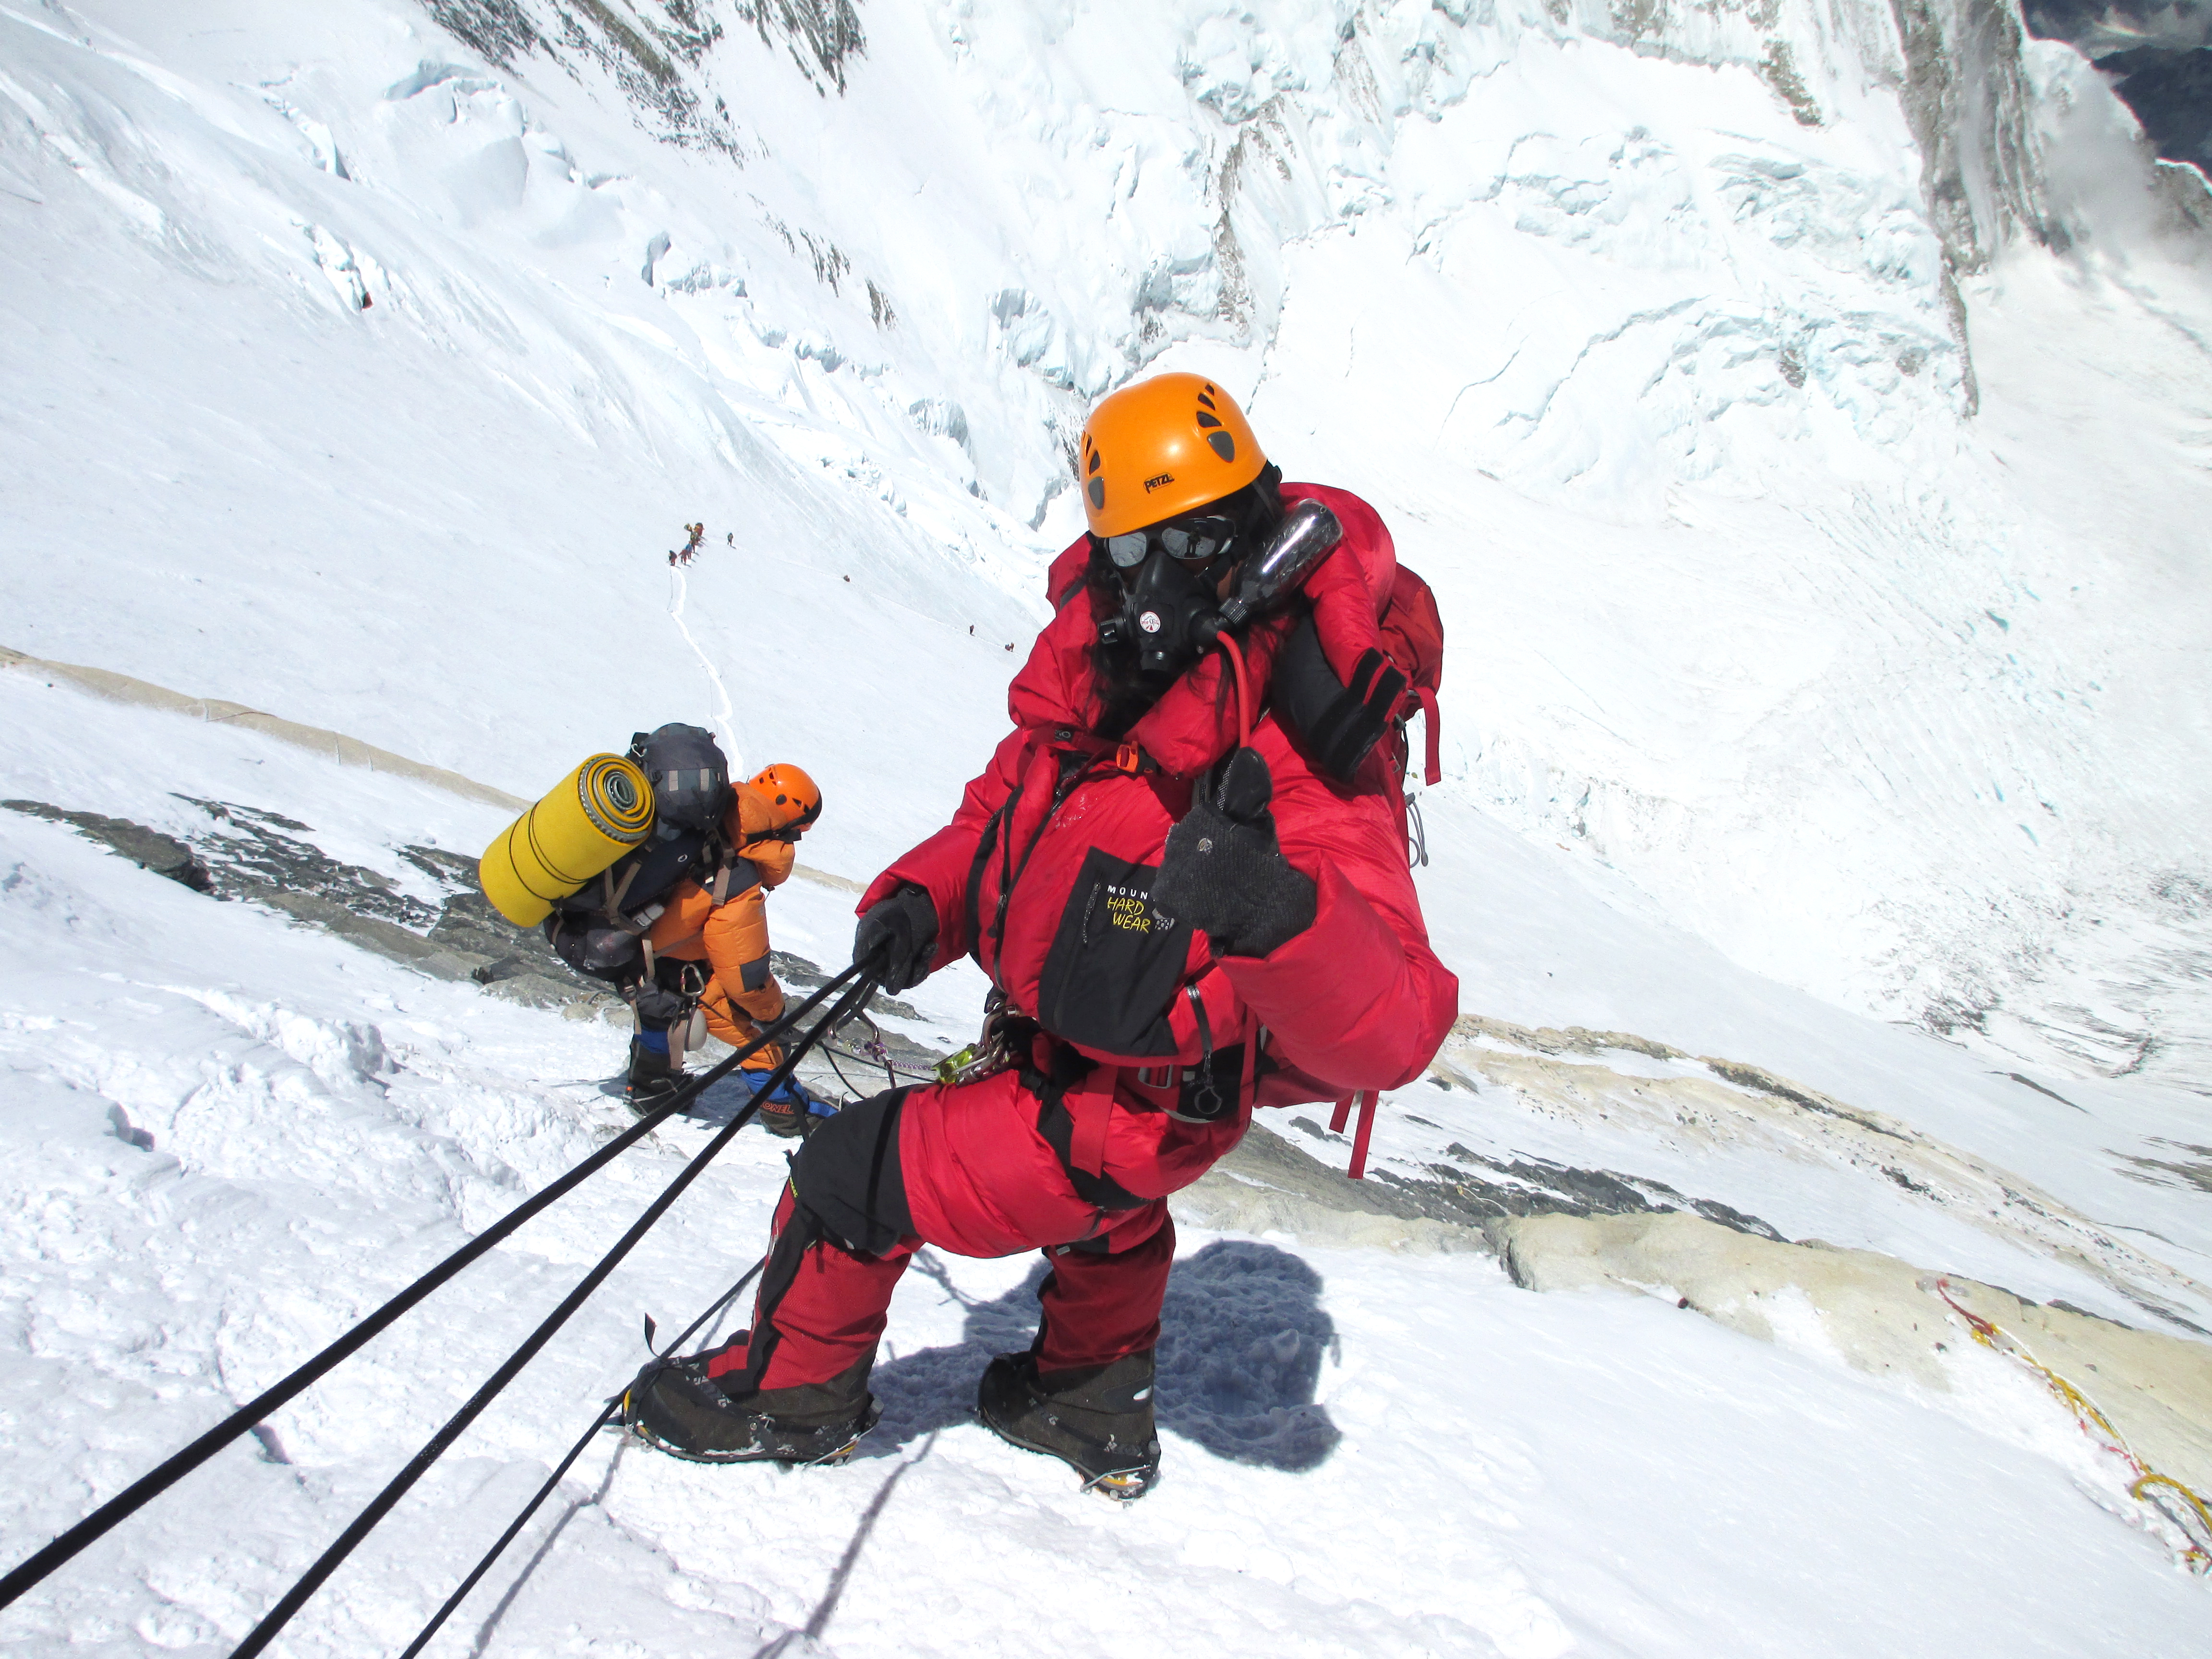 Arunima Sinha Climbs Mount Everest